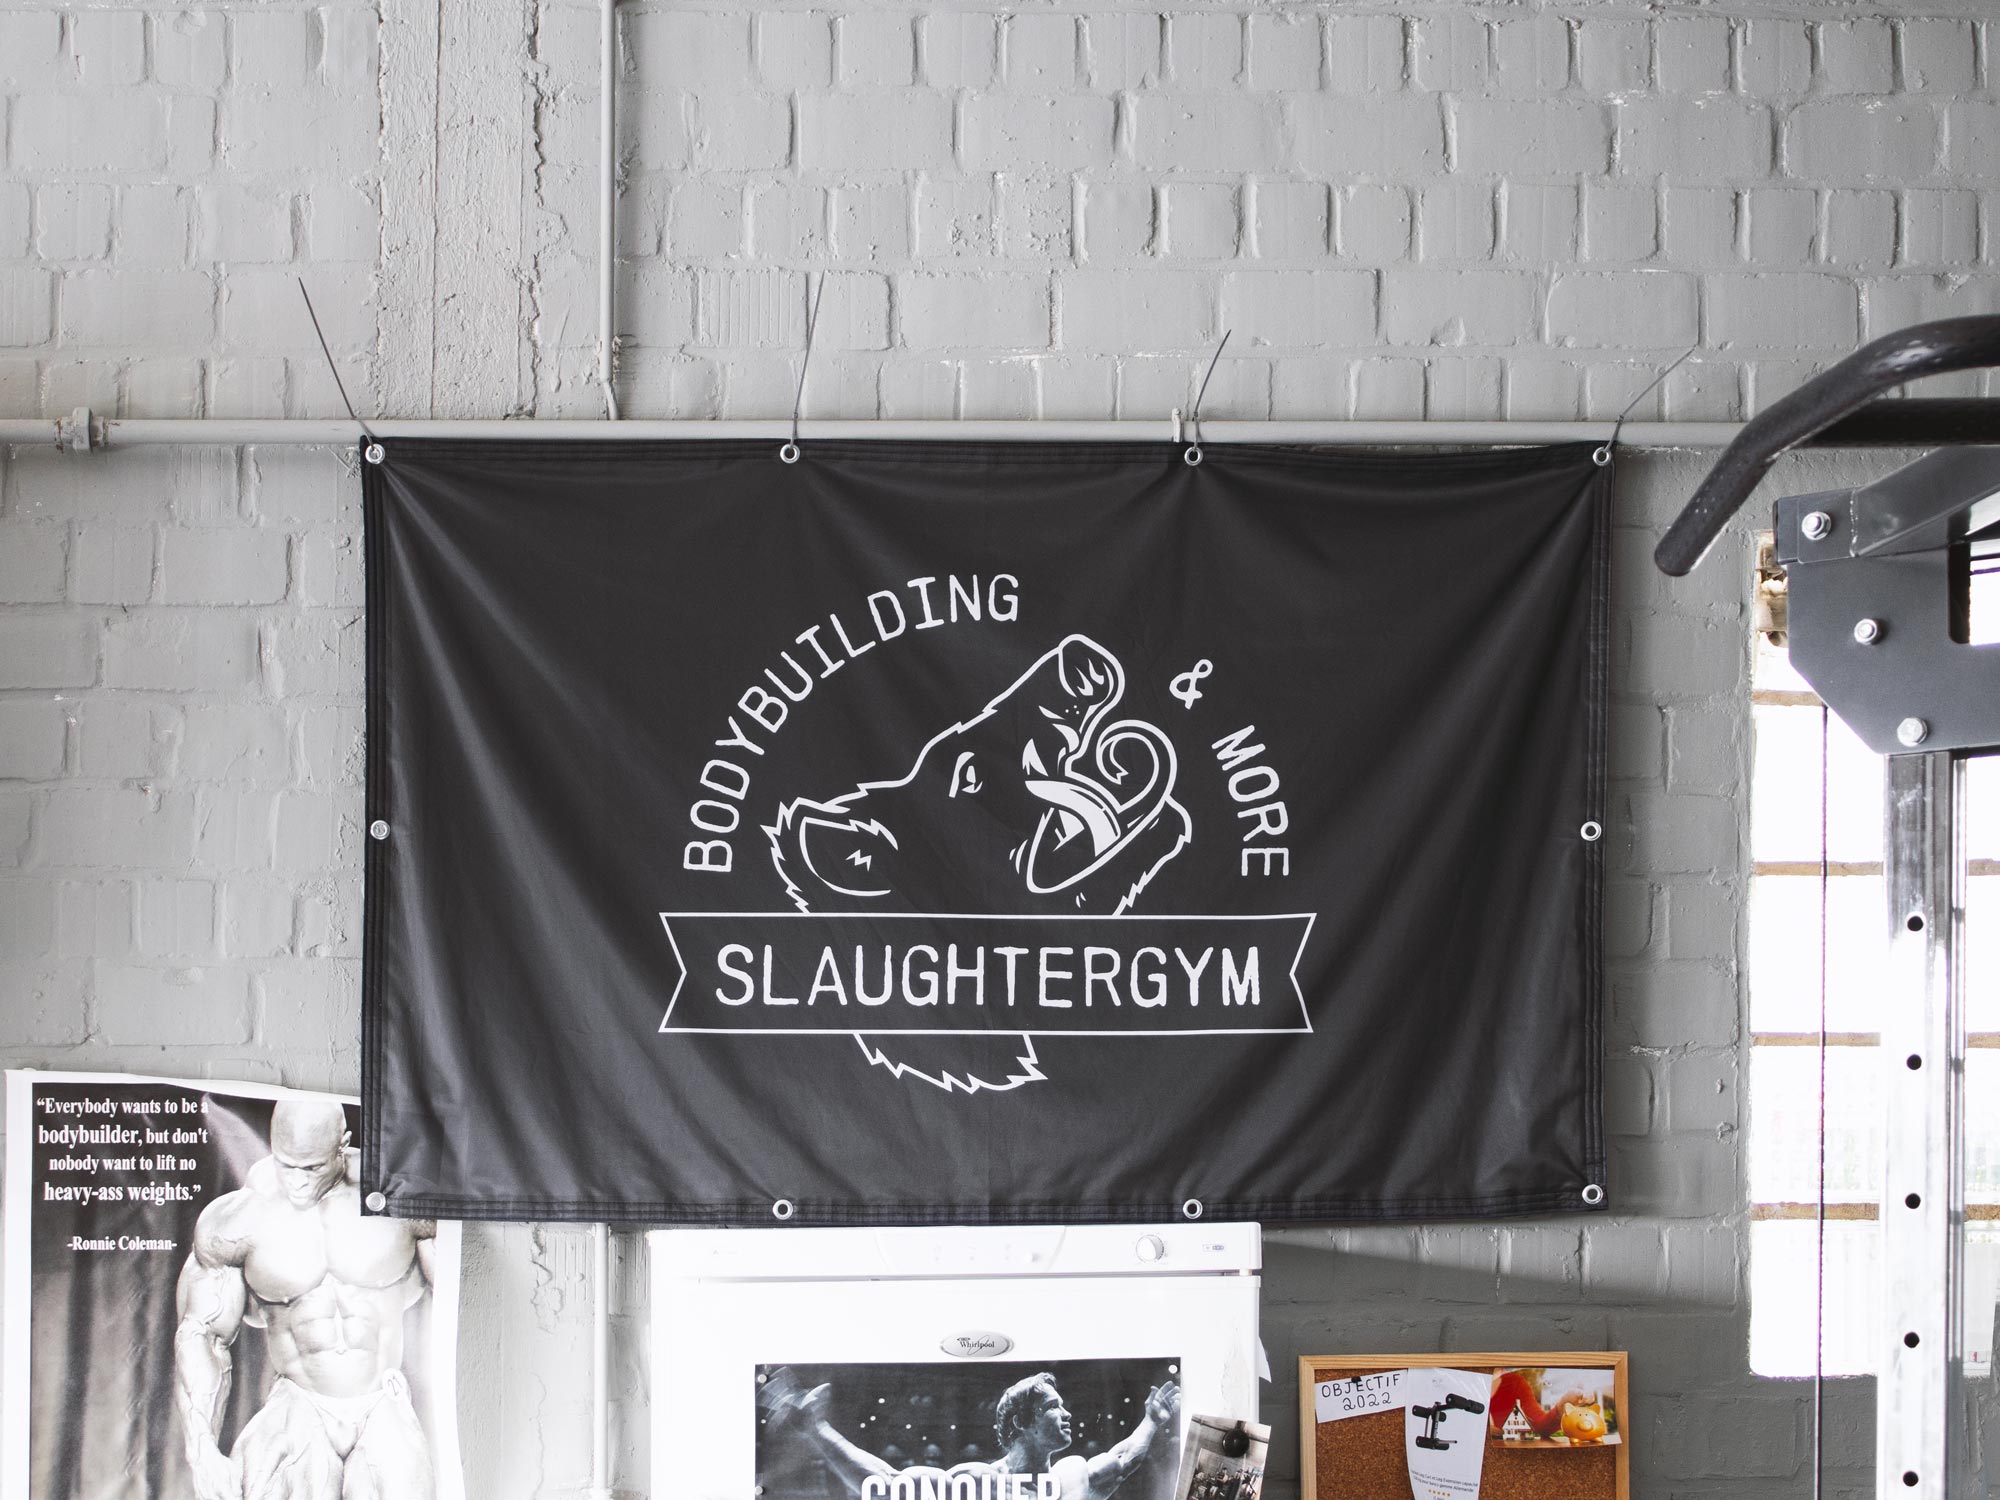 Slaughtergym - bache - Upend Studio